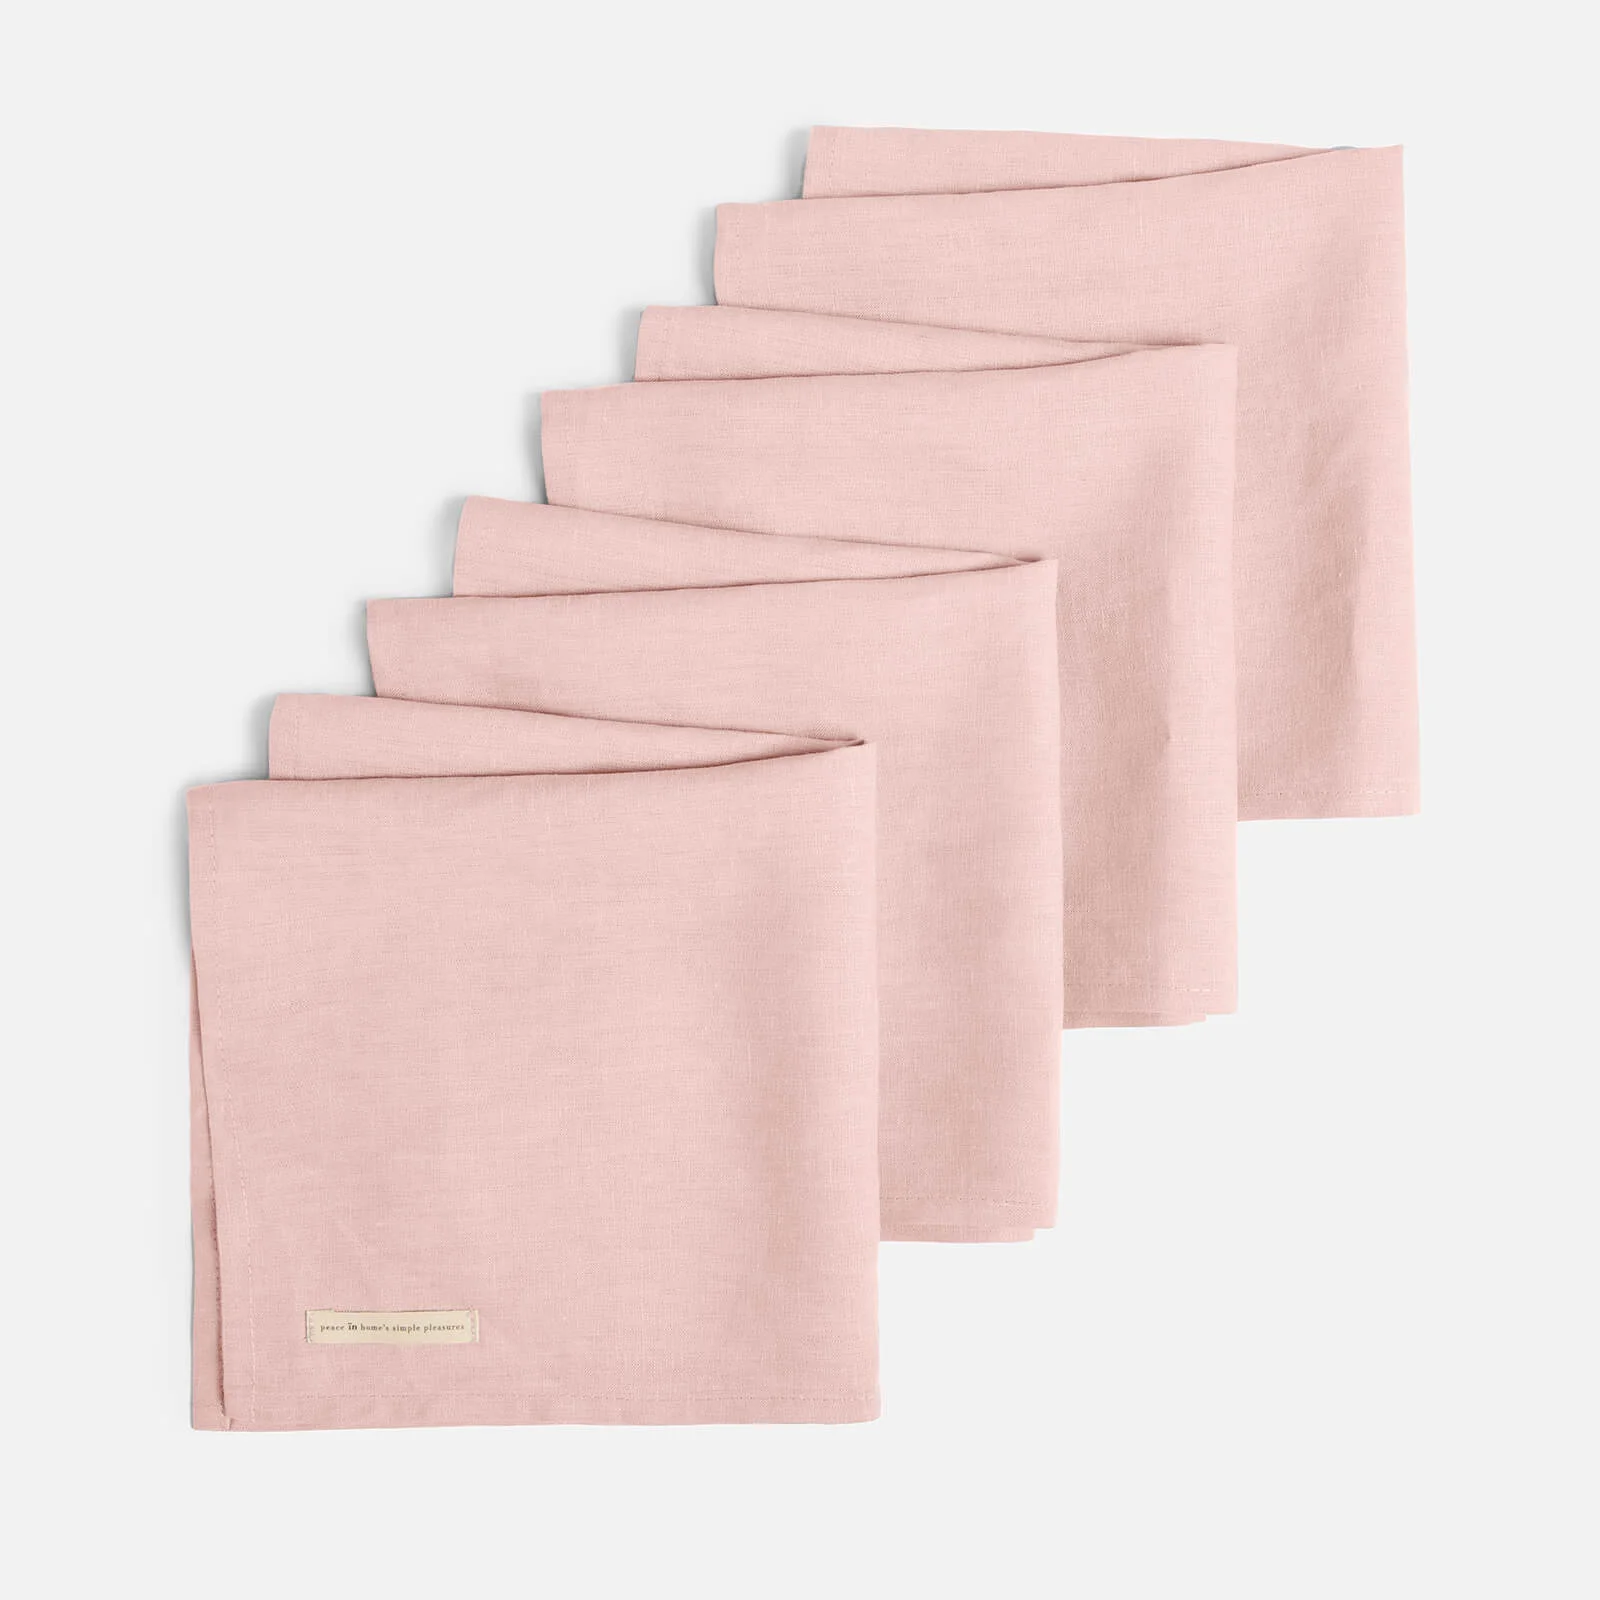 ïn home Linen Napkin - Pink - Set of 4 Image 1